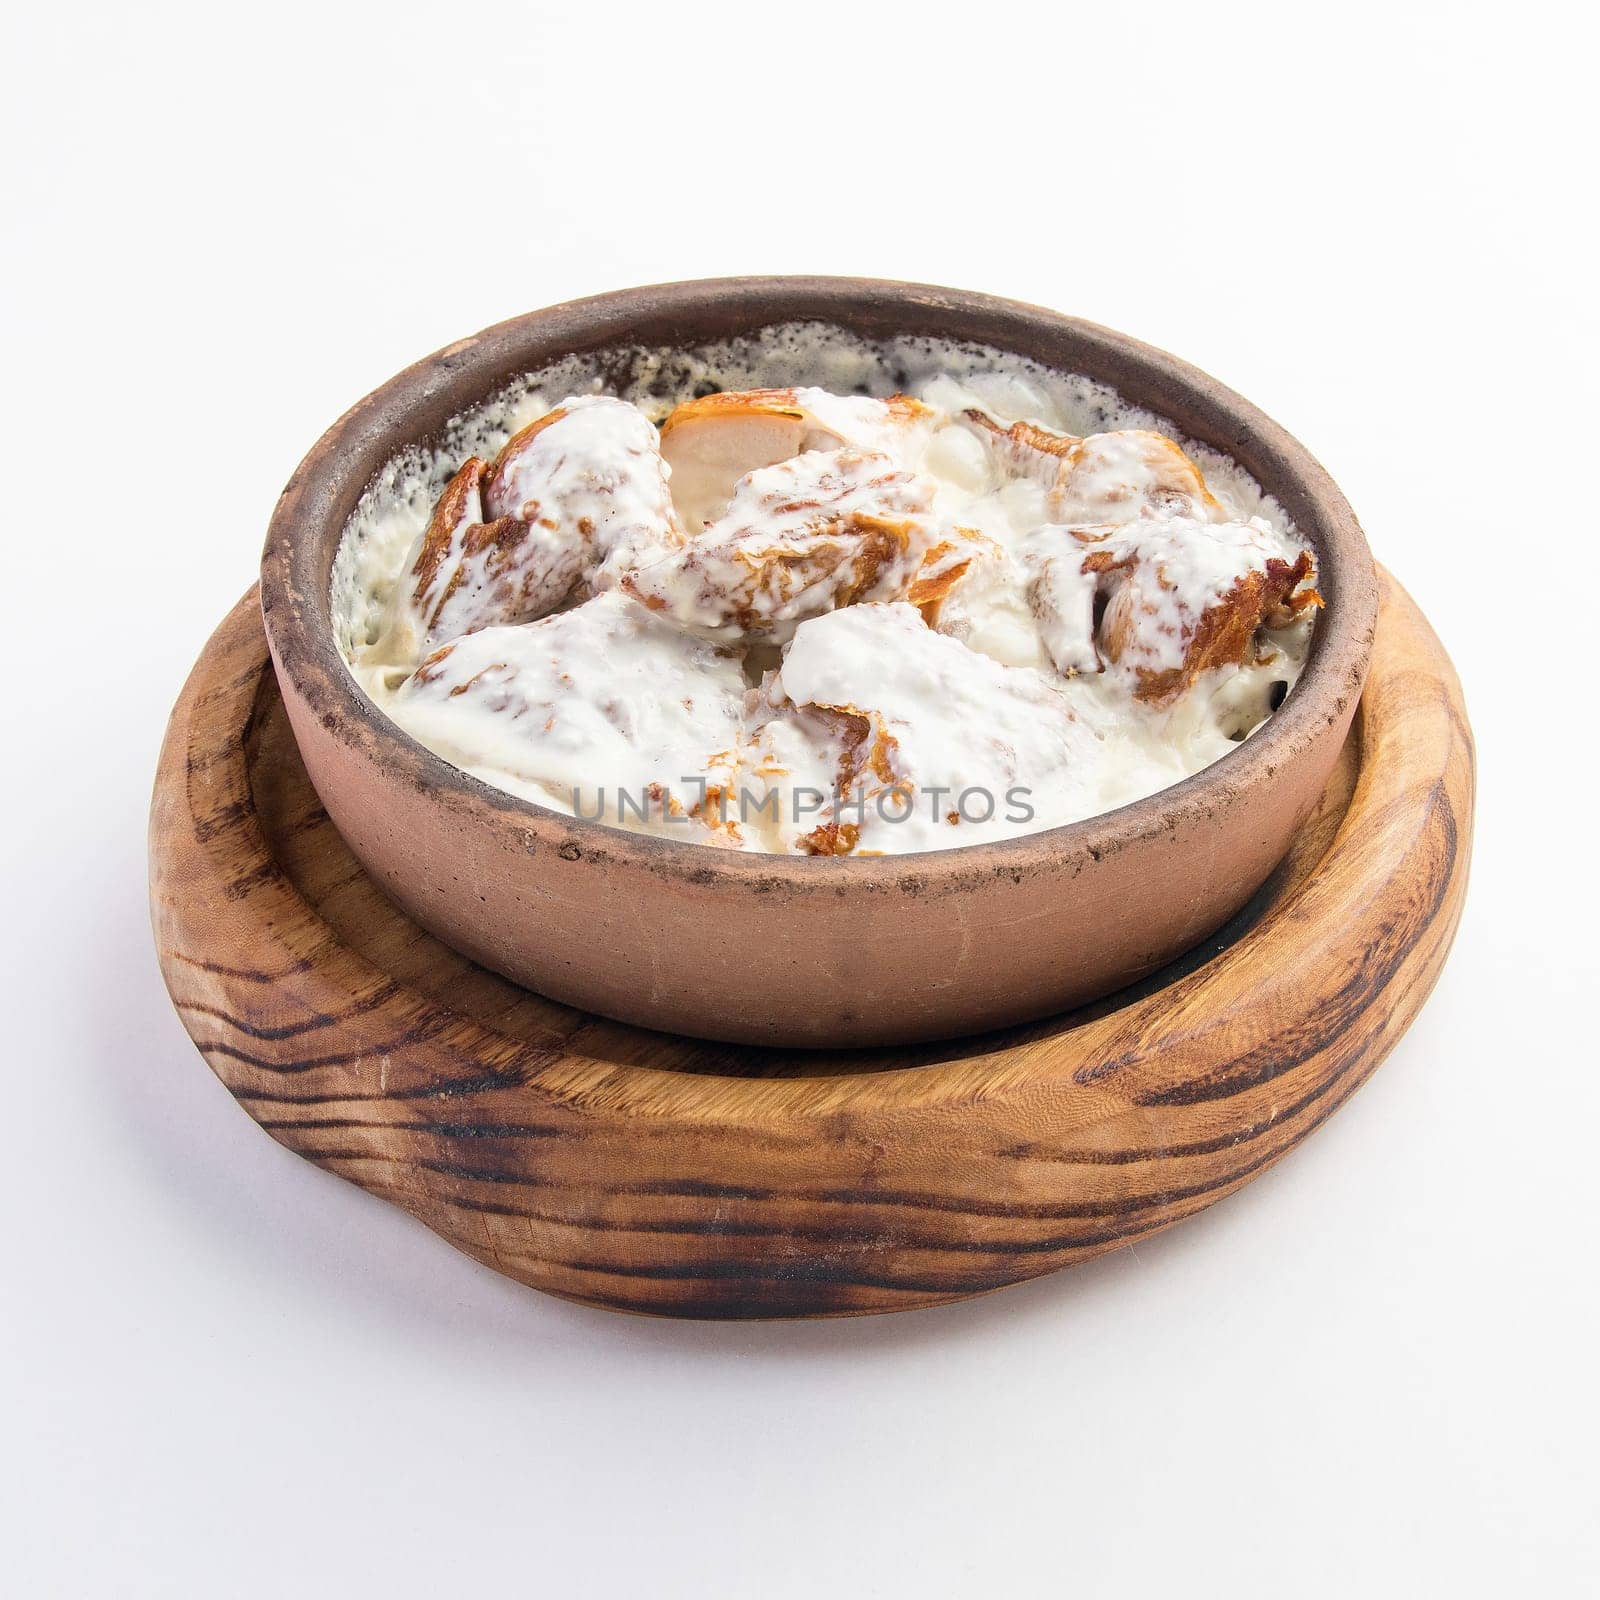 A beautiful shot of a bowl of chmeruli by A_Karim